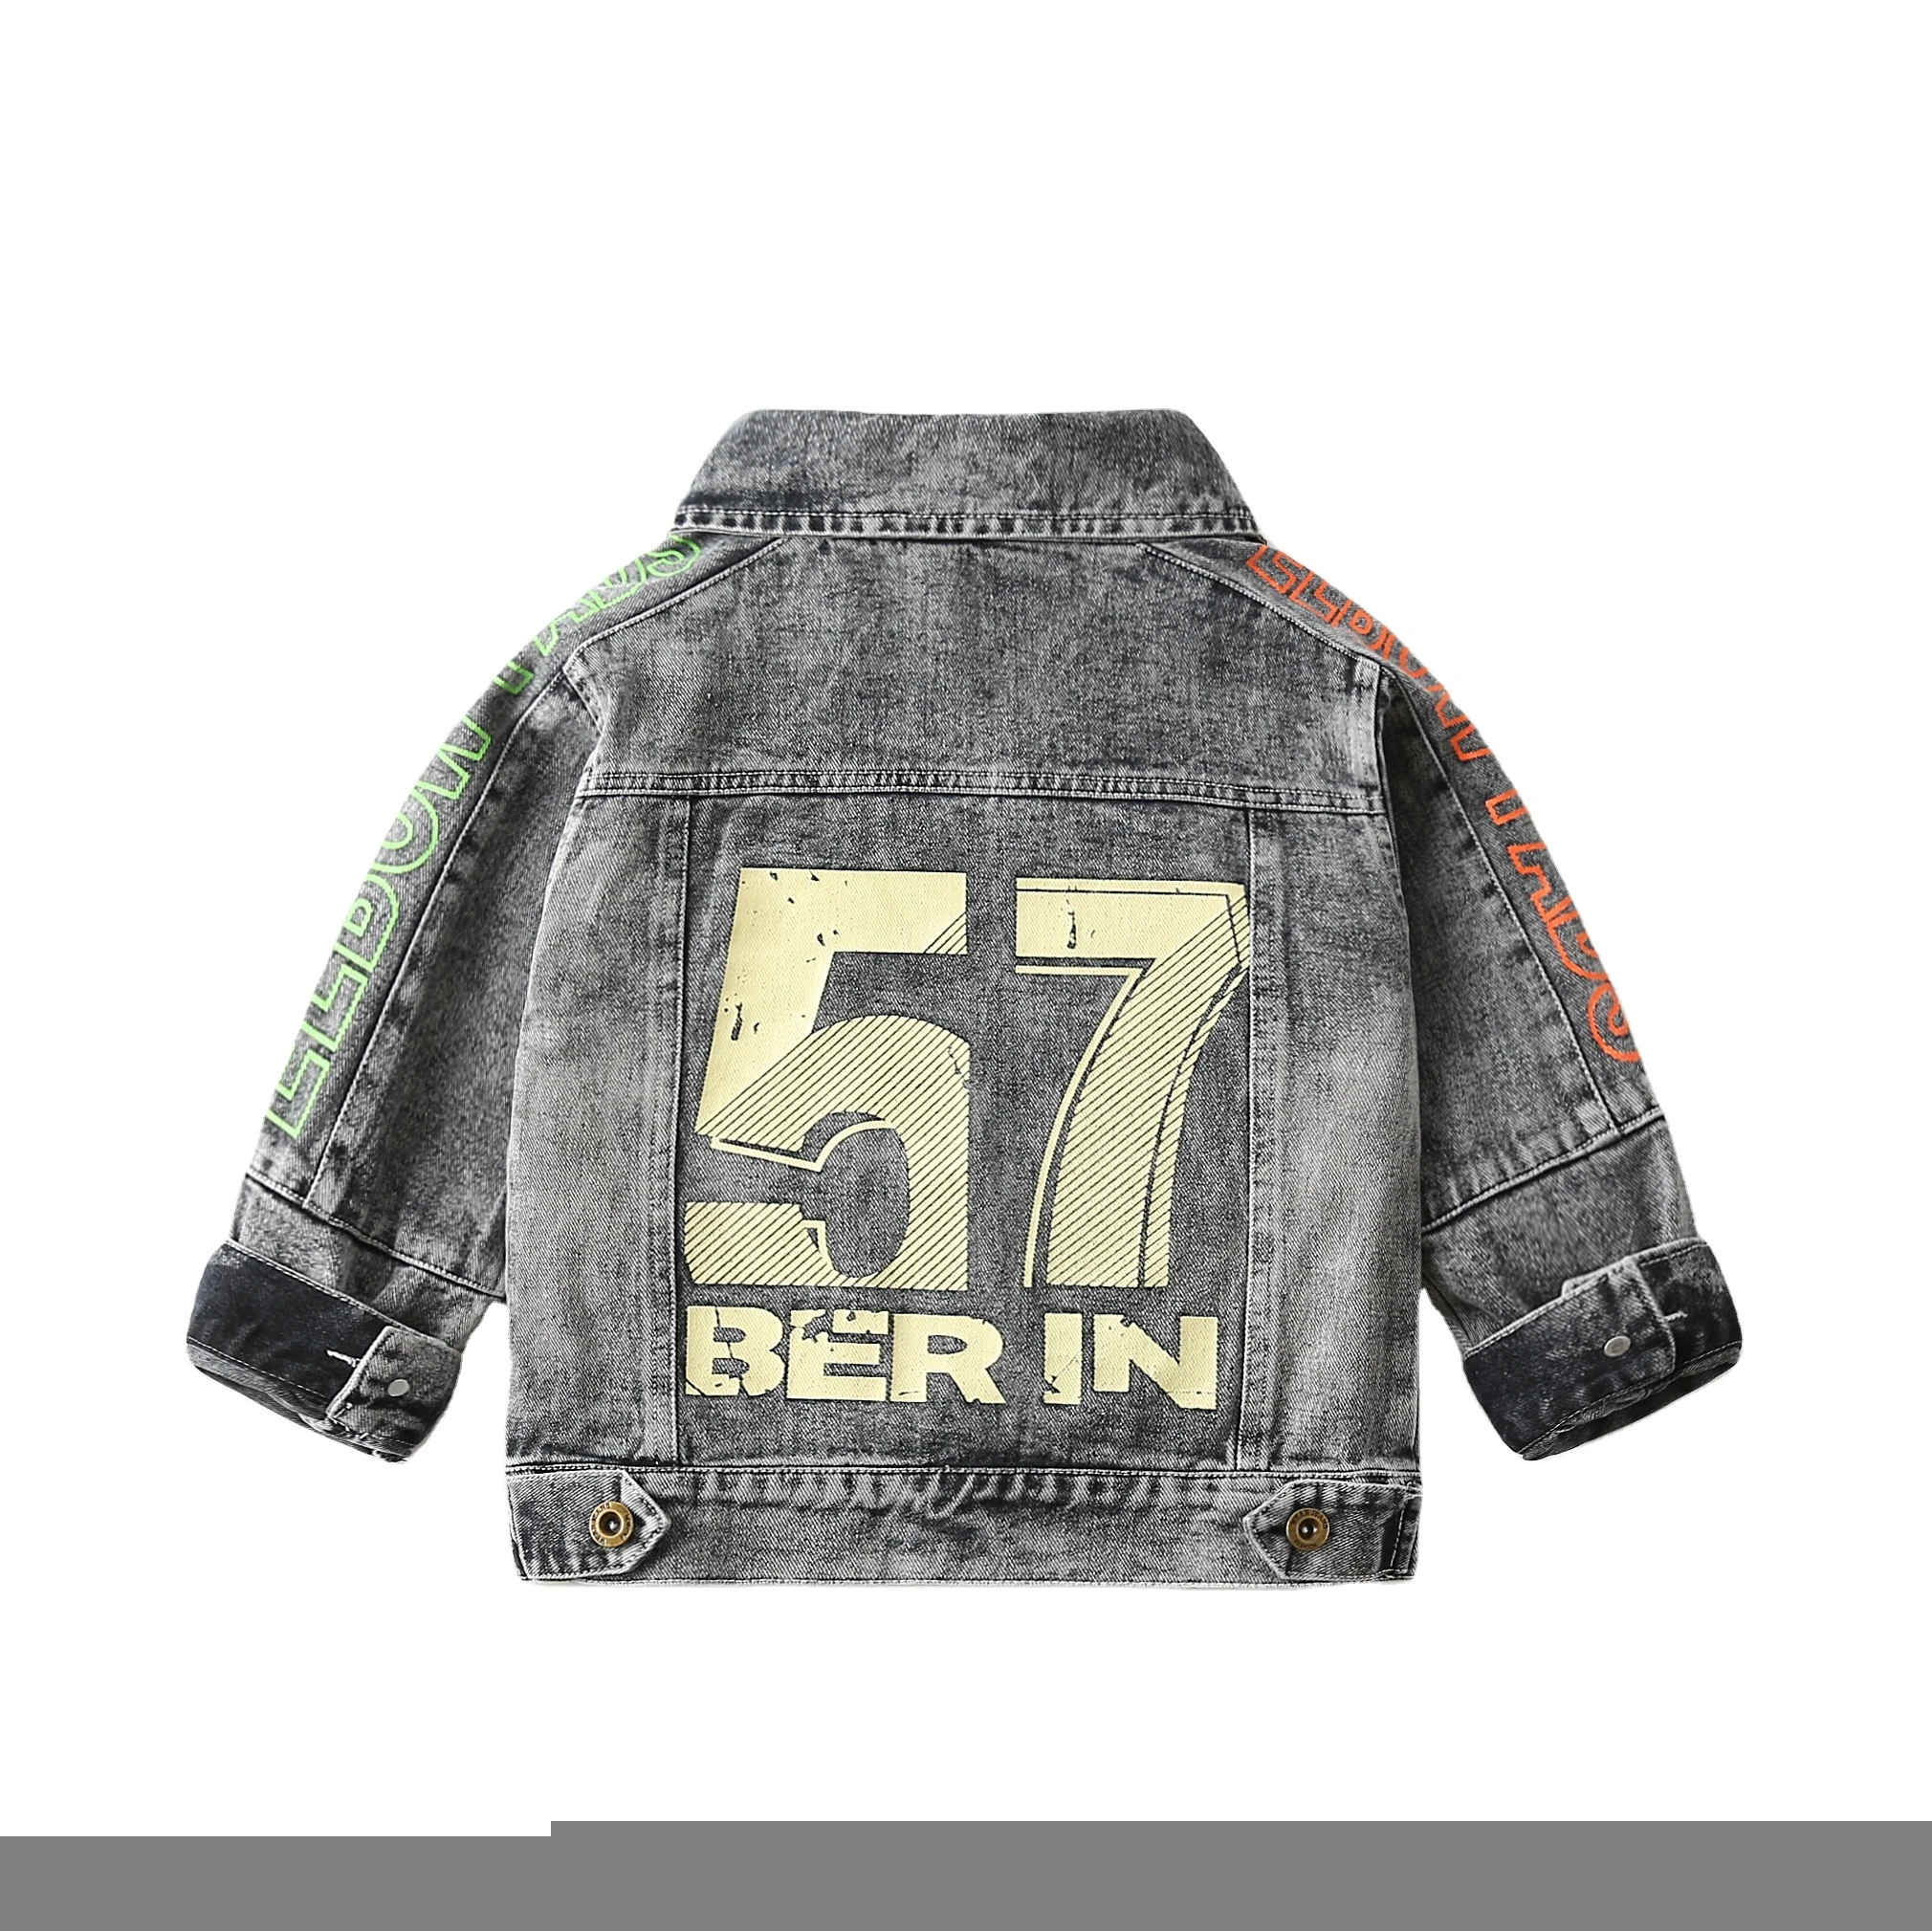 2020 High quality baby jeans jacket custom denim jean jacket printed kids denim jacket